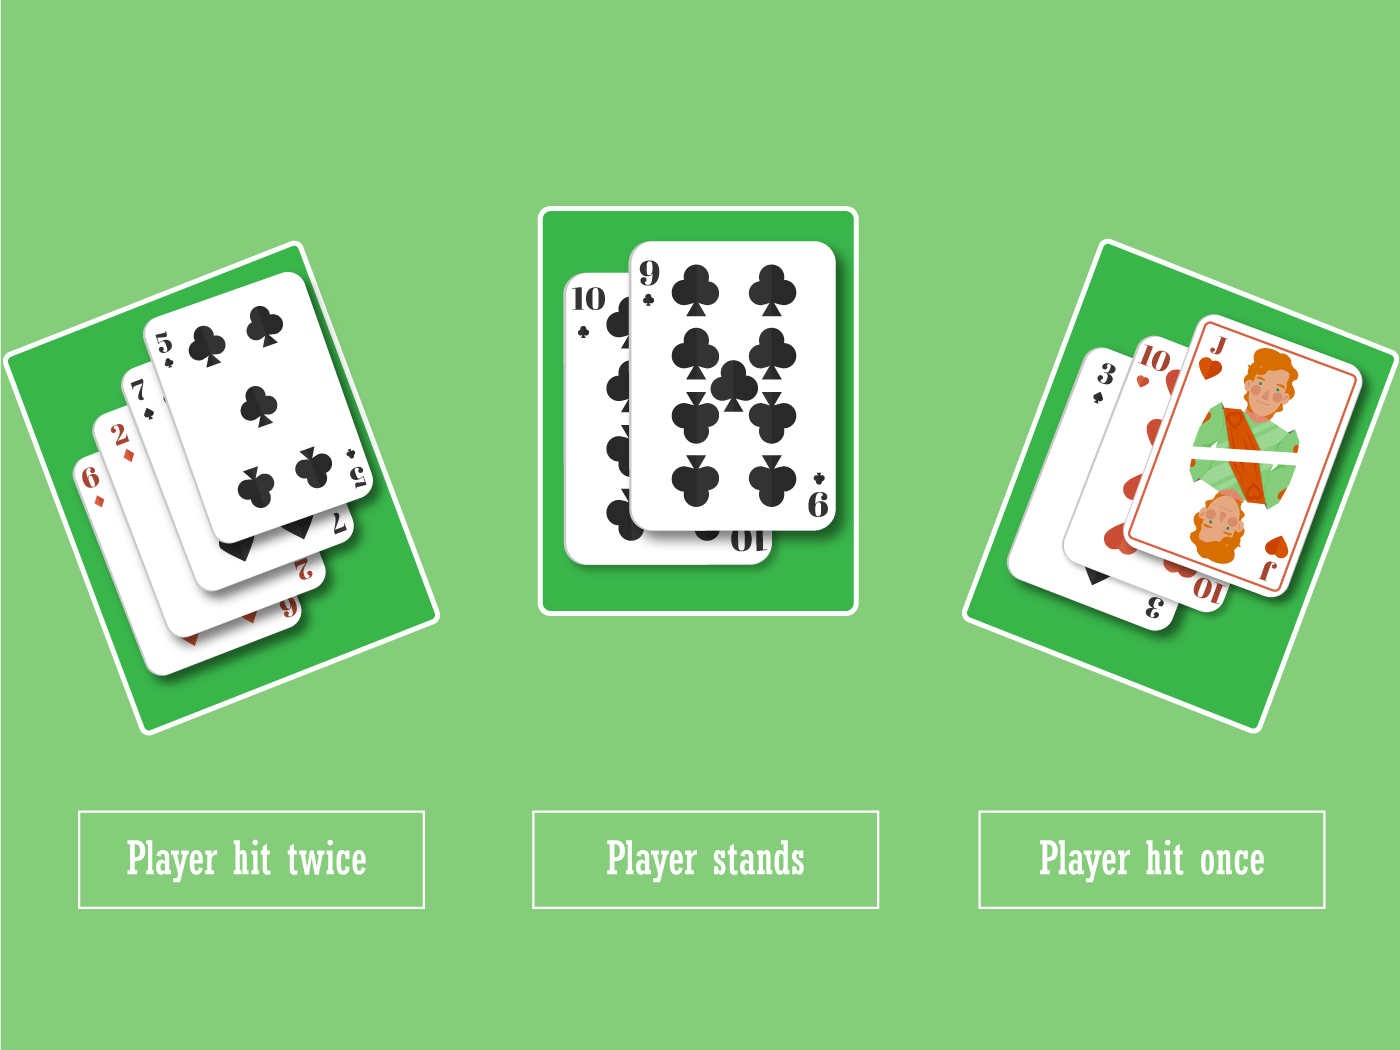 All player cards dealt